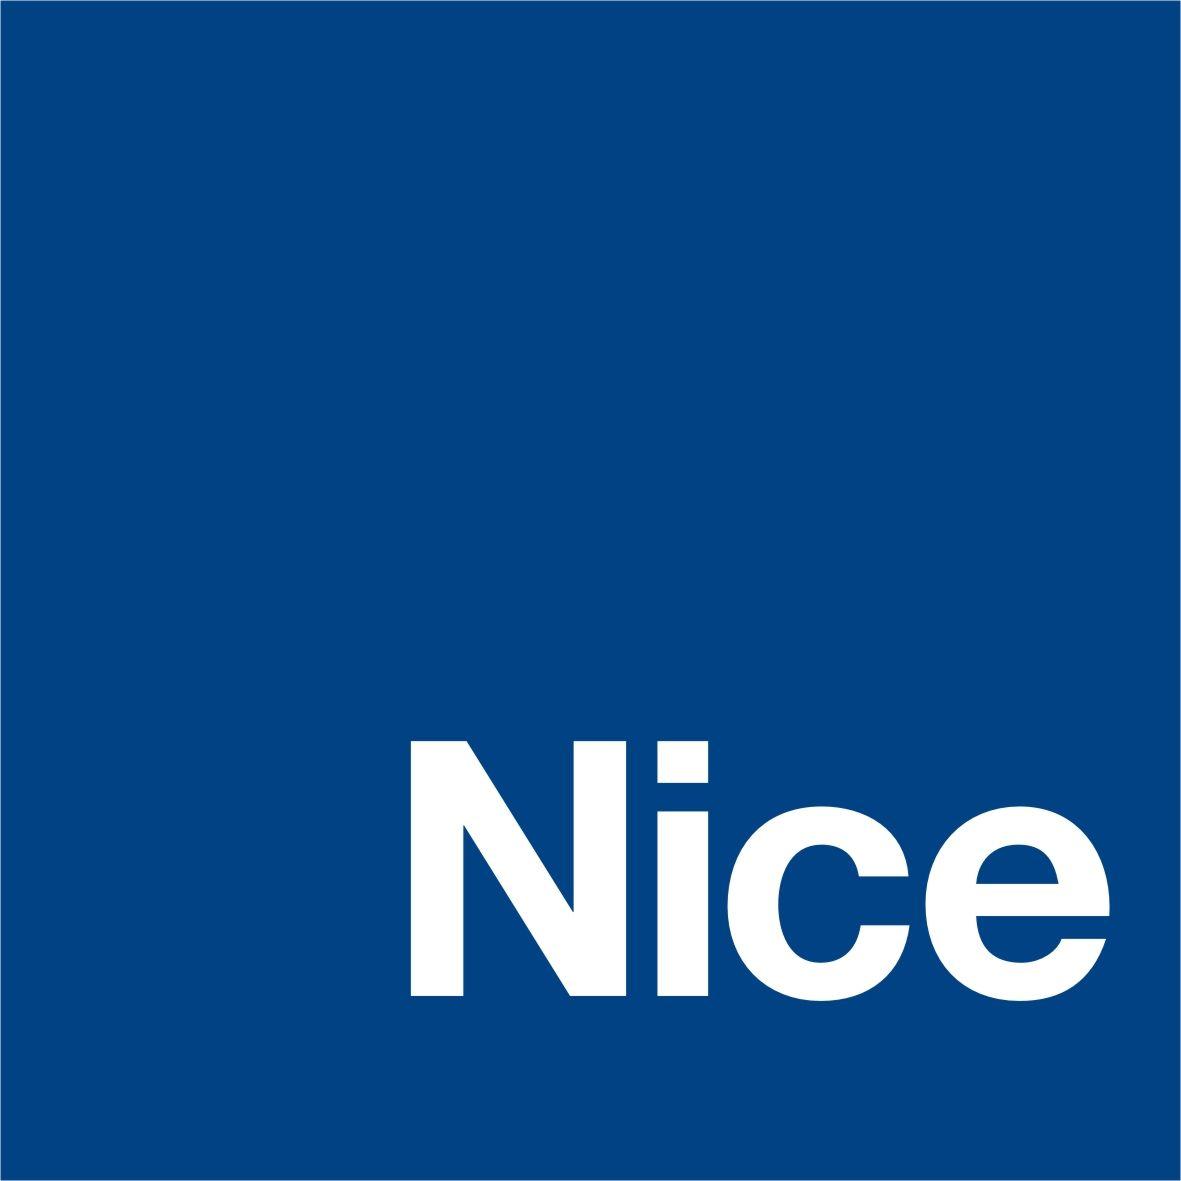 Nice Logo - File:LOGO NICE RGB.jpg - Wikimedia Commons